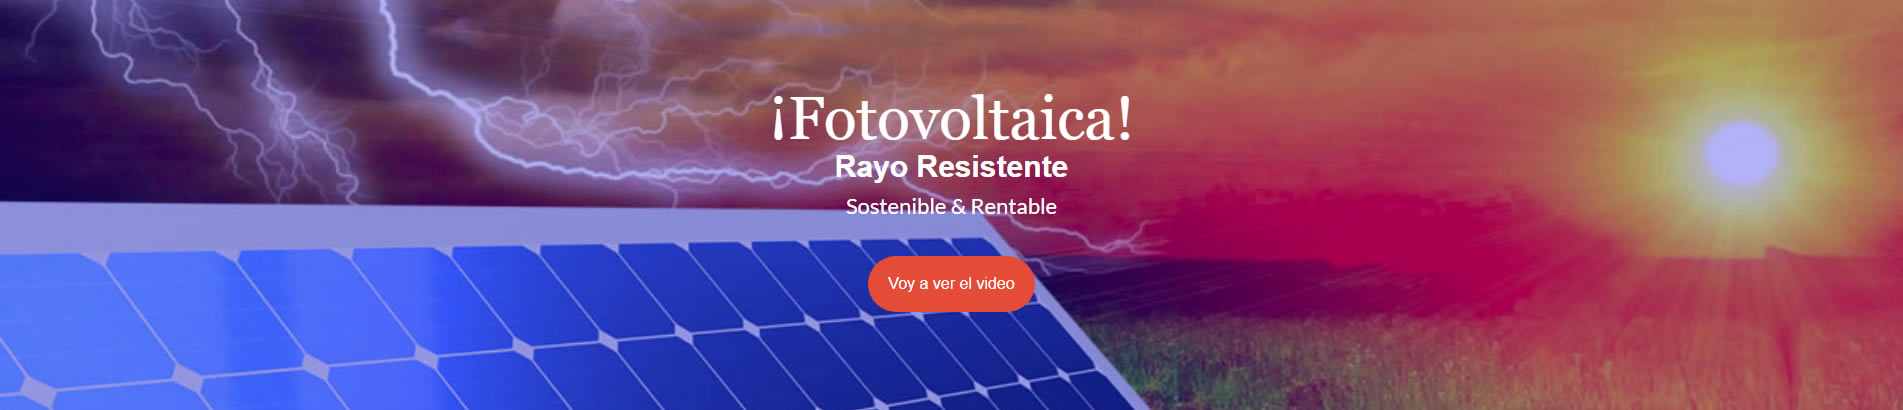 fotovoltaica rayo resistente